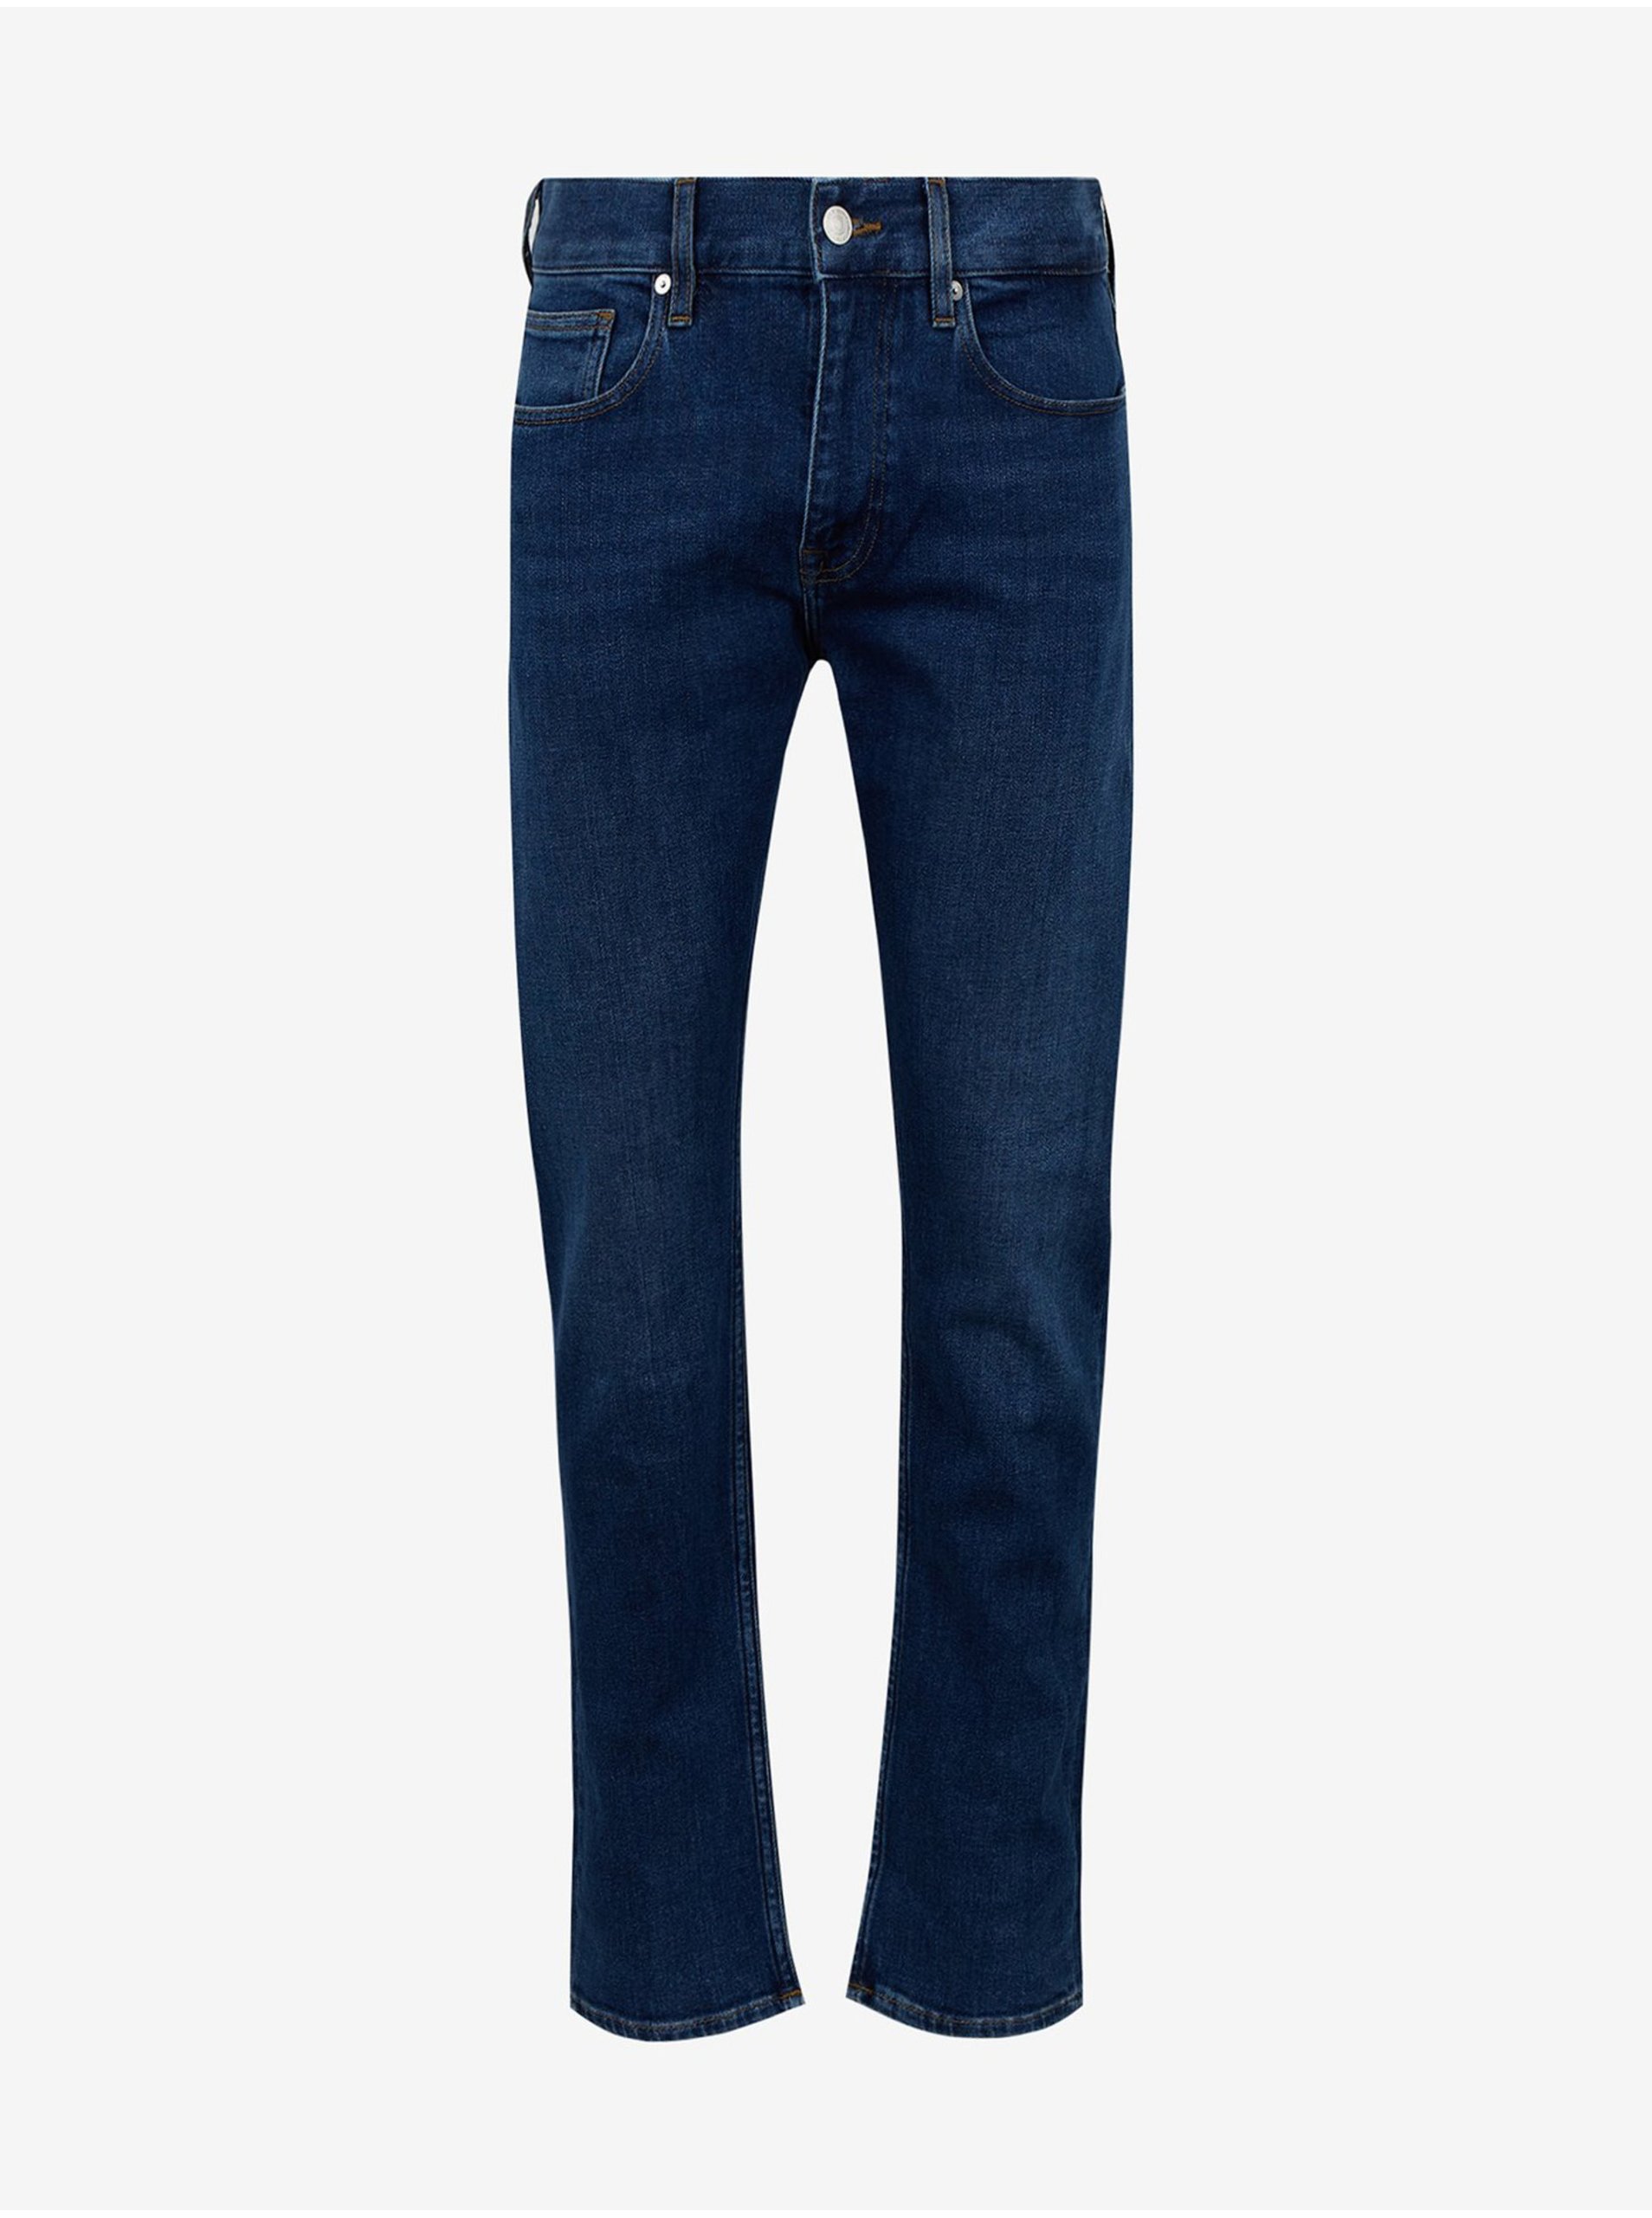 Lacno Rifle Slim Fit Comfort Den Calvin Klein Jeans